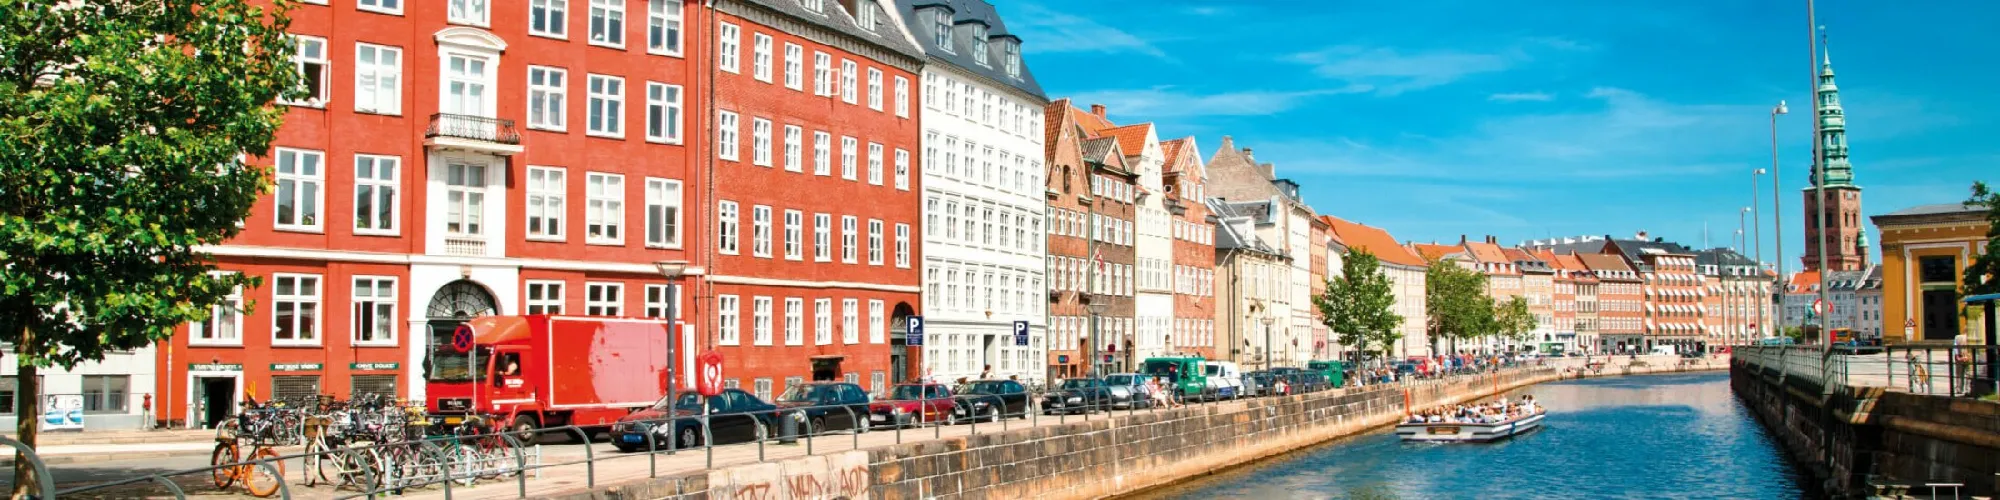 Städtereise Kopenhagen background image